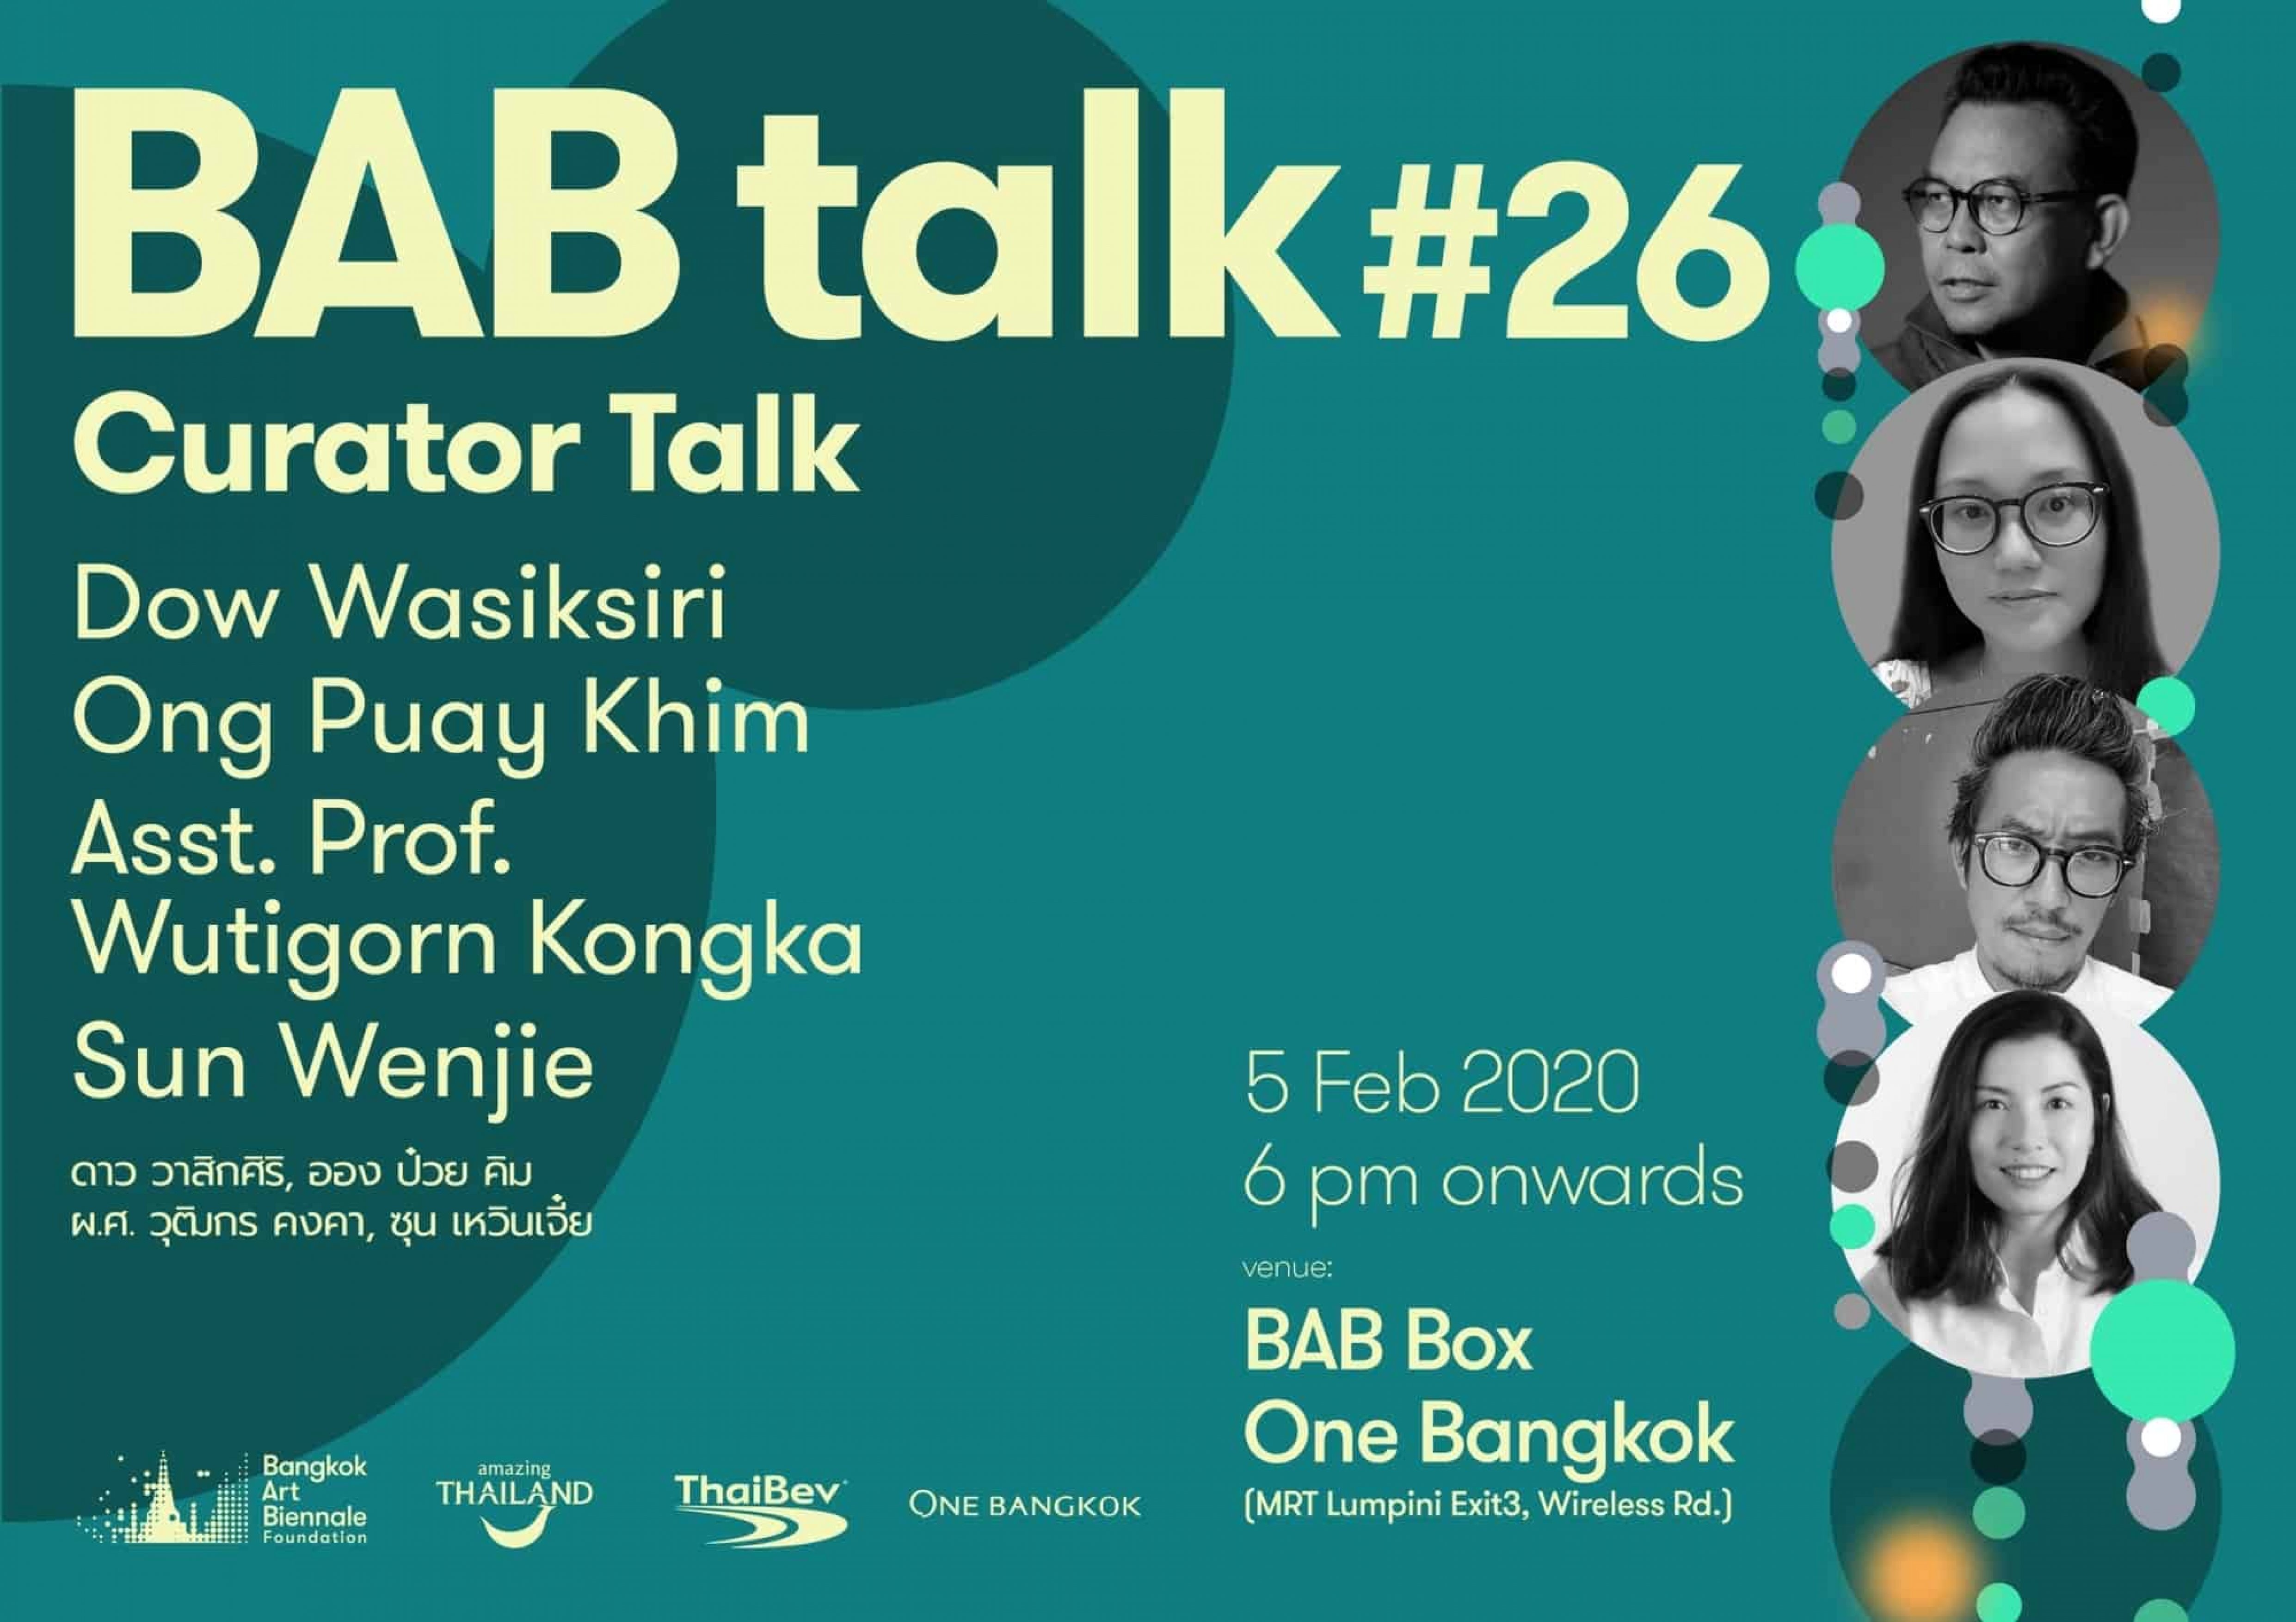 BAB Talk #26 - Curator Talk